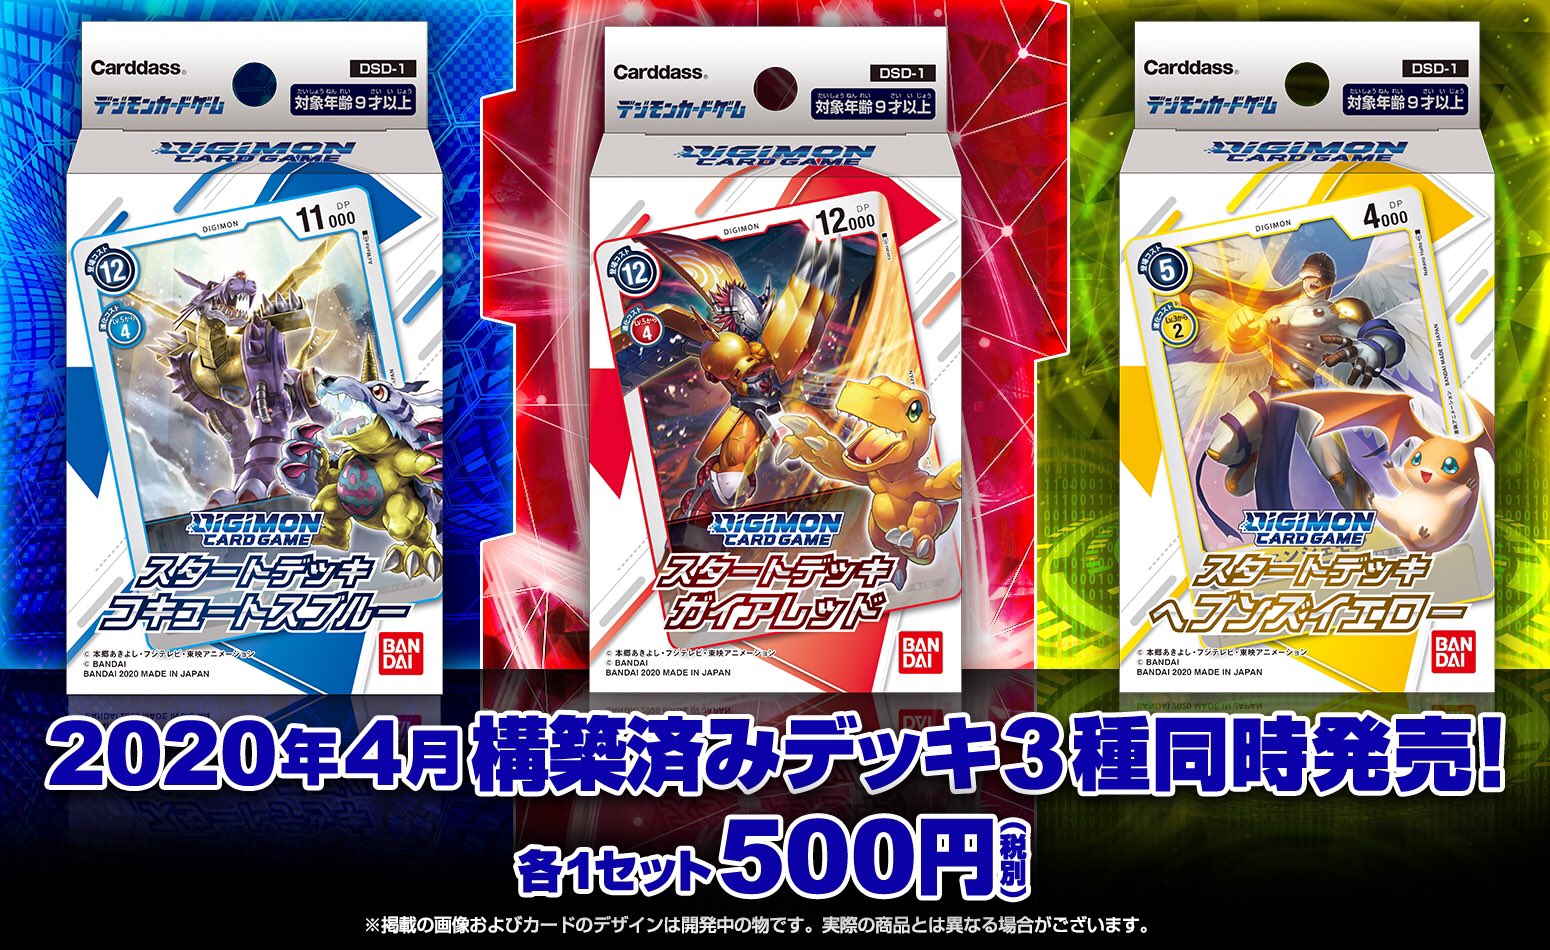 Digimon Card Game Starter Deck Cards English TCG Starter Singles